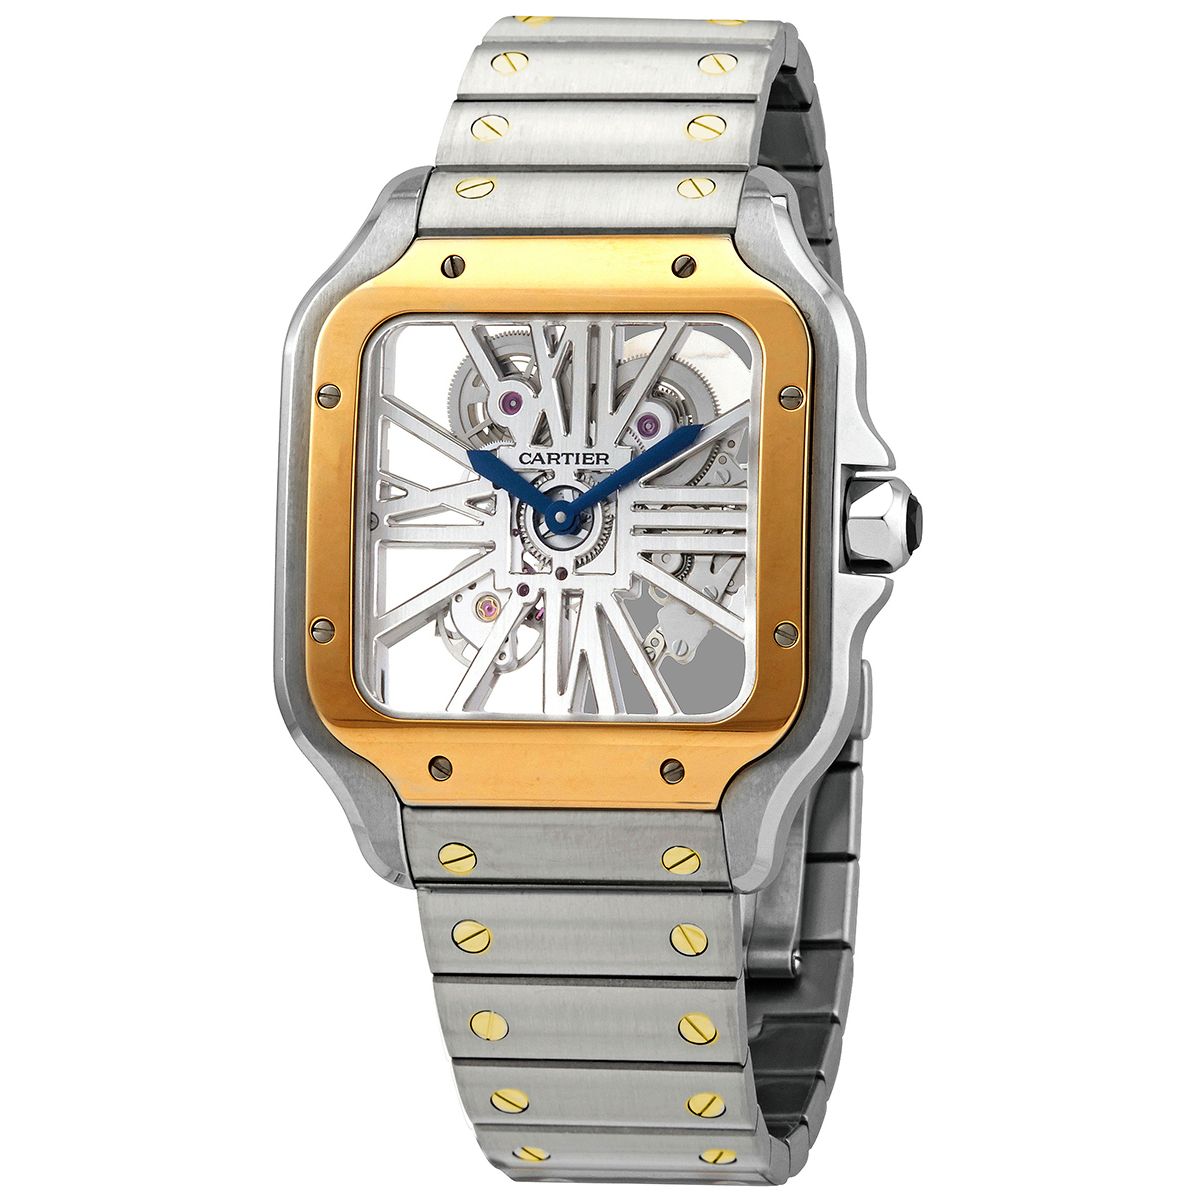 Cartier Tank Louis Cartier W159756 Unisex Watch in 18k Yellow Gold